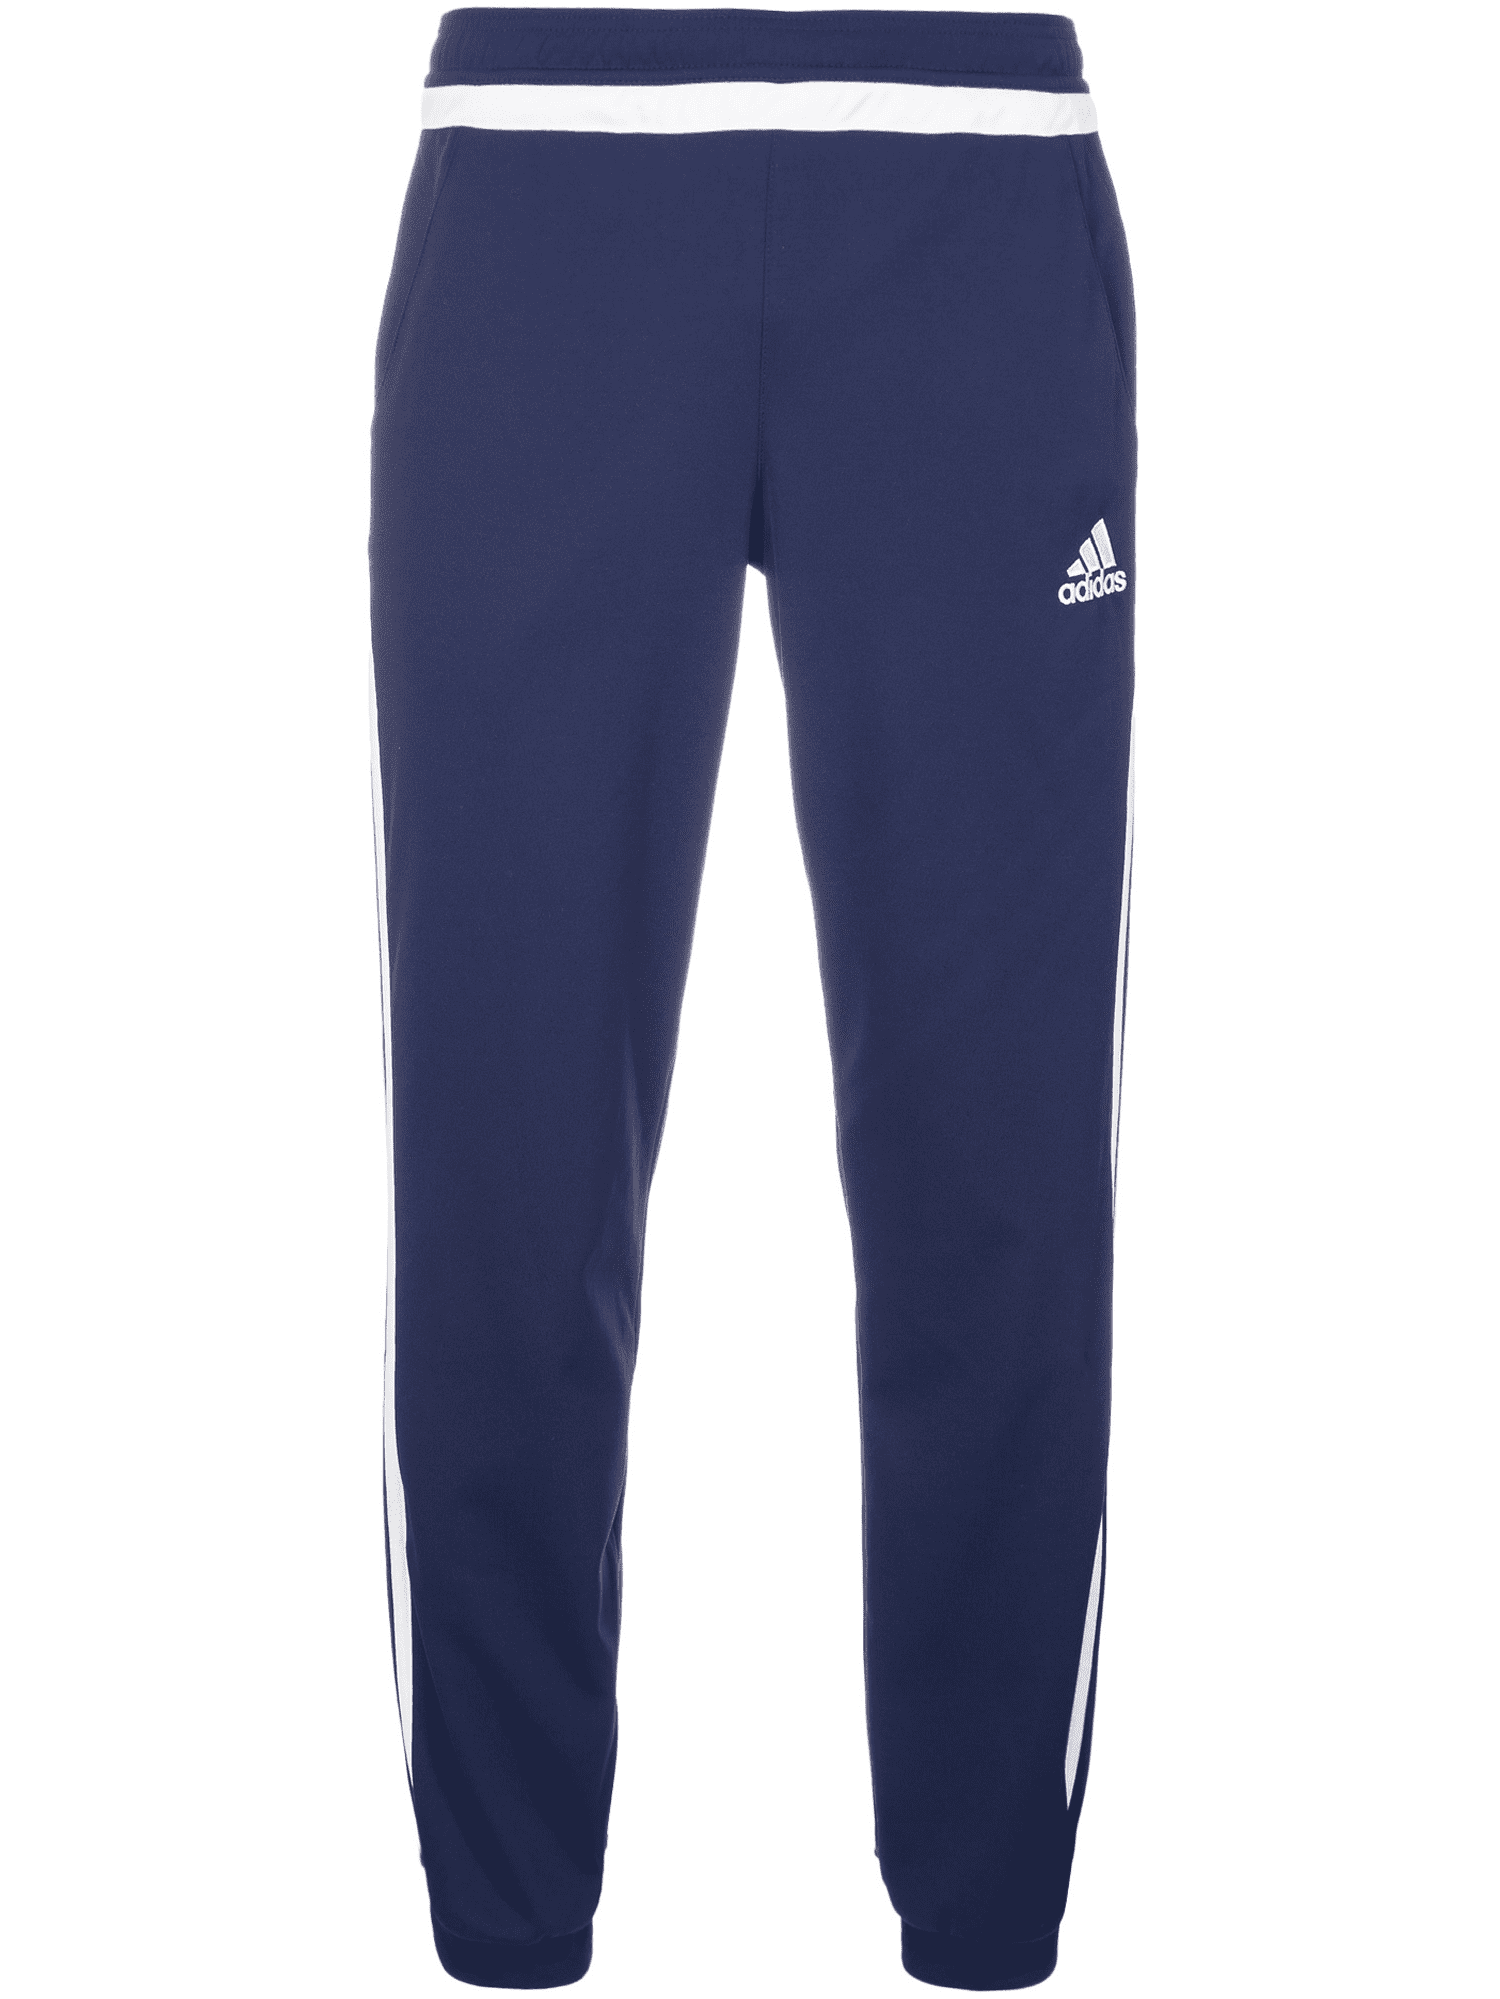 Adidas Men's Tiro 15 Training Pants (Navy/White)